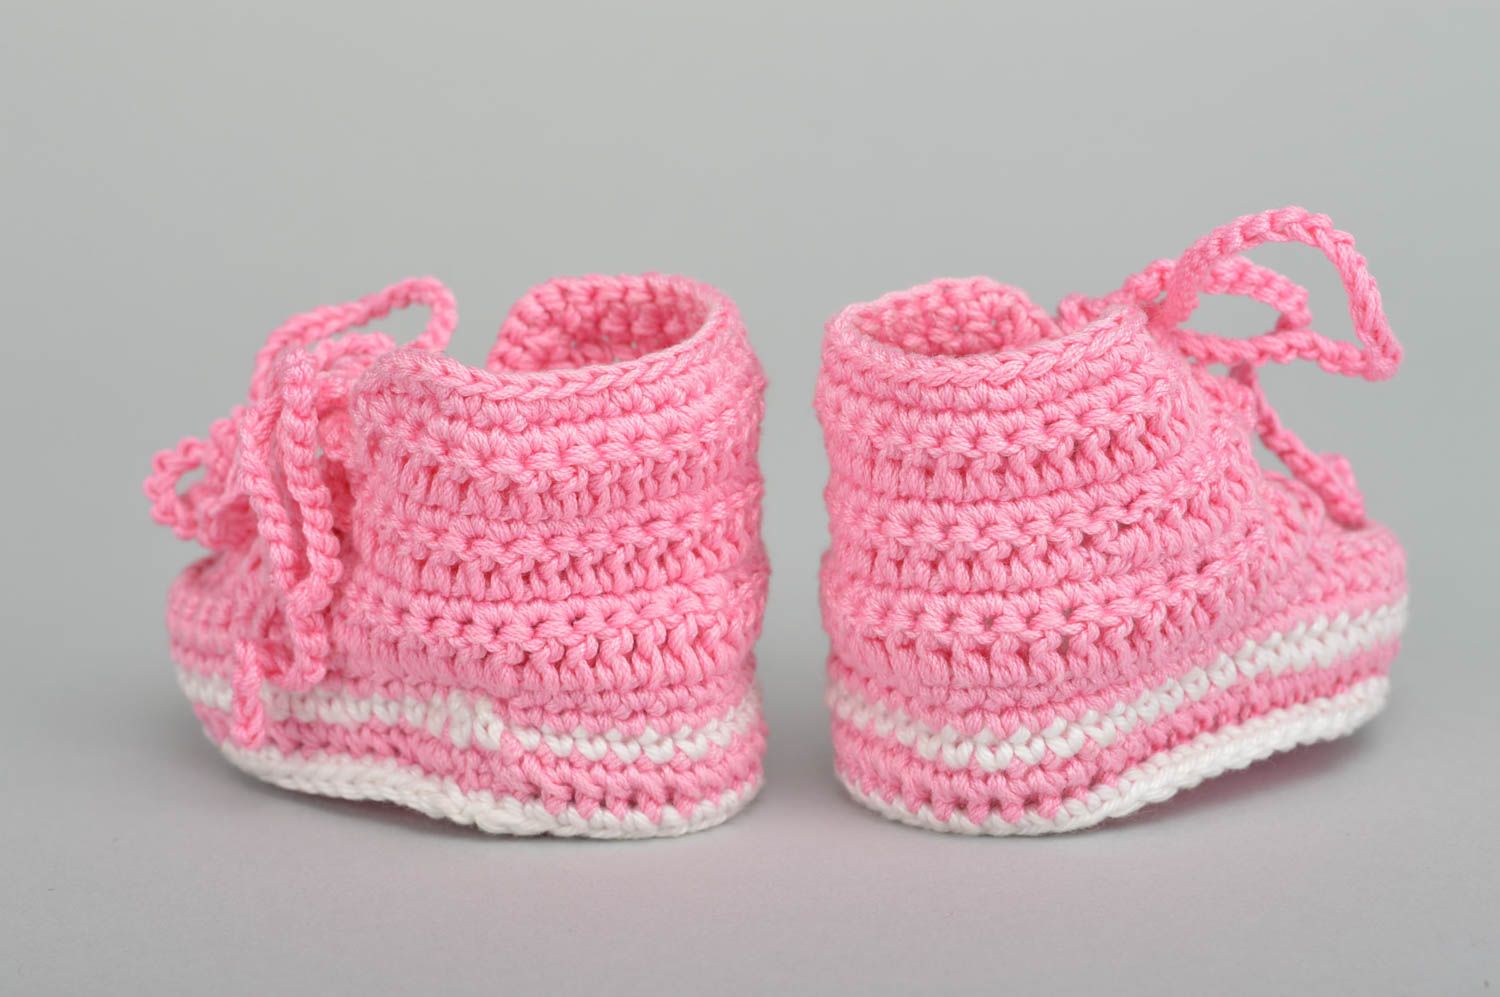 Beautiful handmade baby bootees warm crochet baby booties fashion accessories photo 4